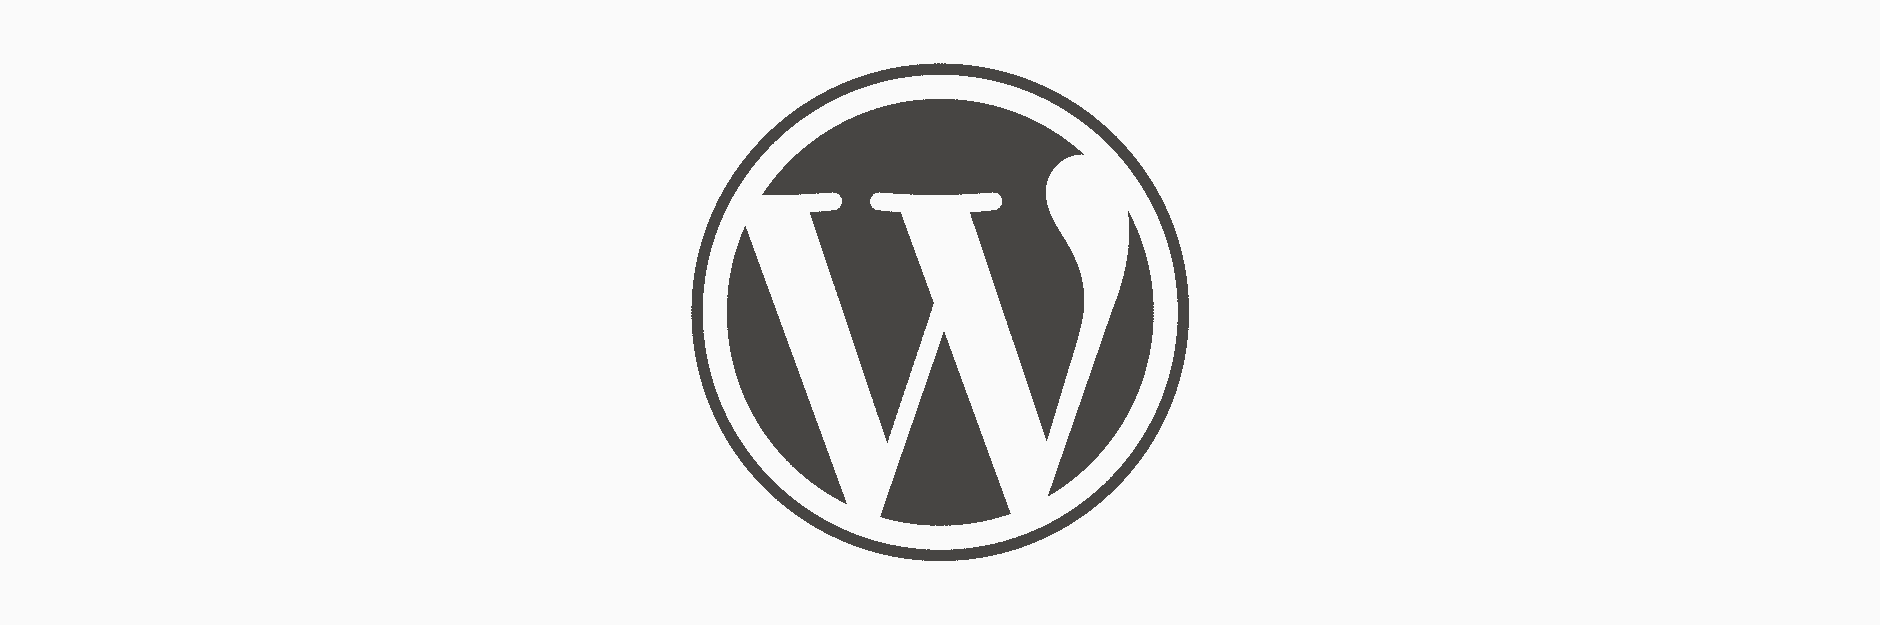 【WordPress】MW WP Formで選択項目の値をフックでいろいろ変更したい